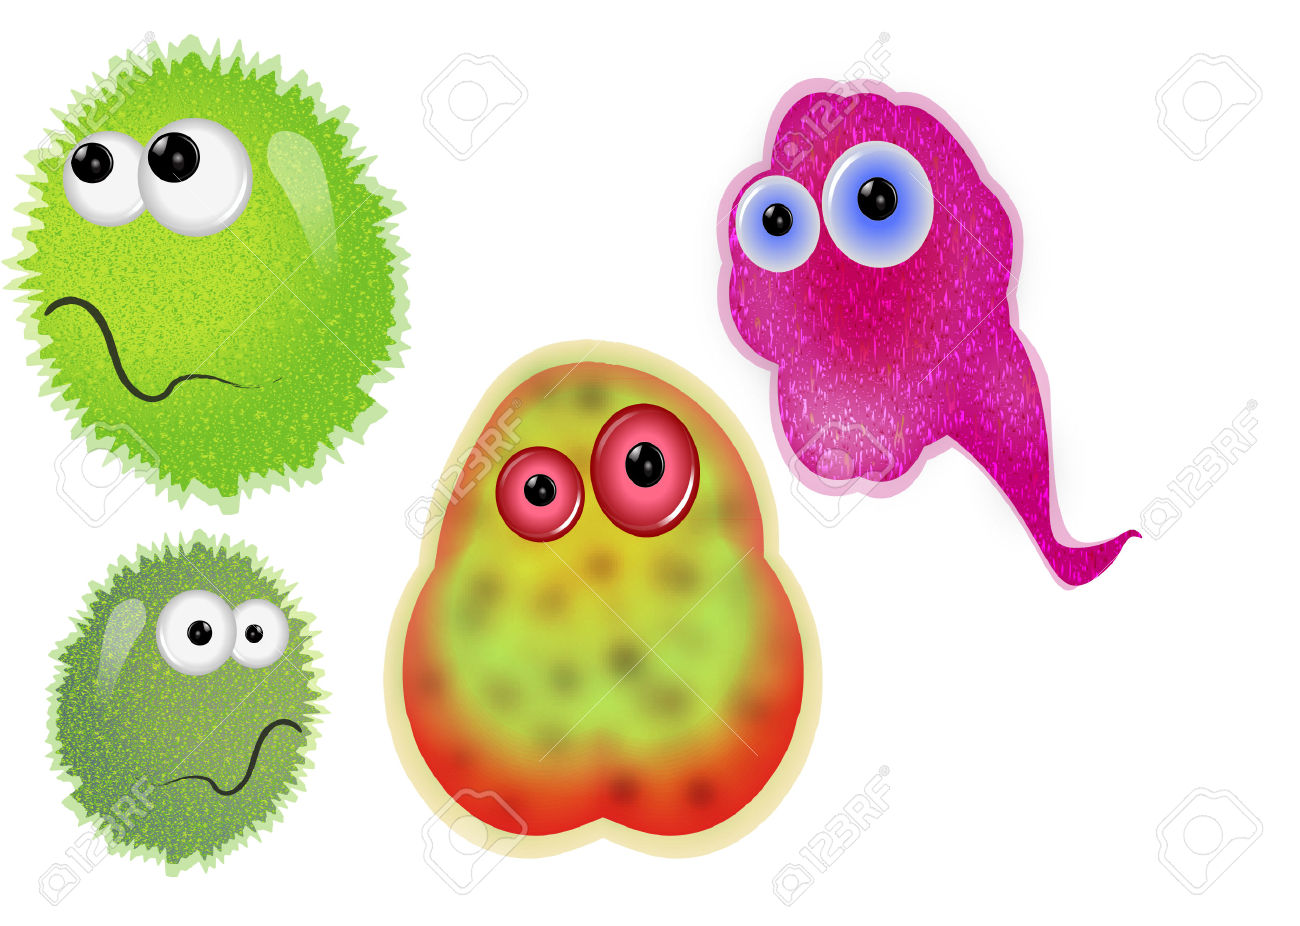 free animated bacteria clipart - photo #50